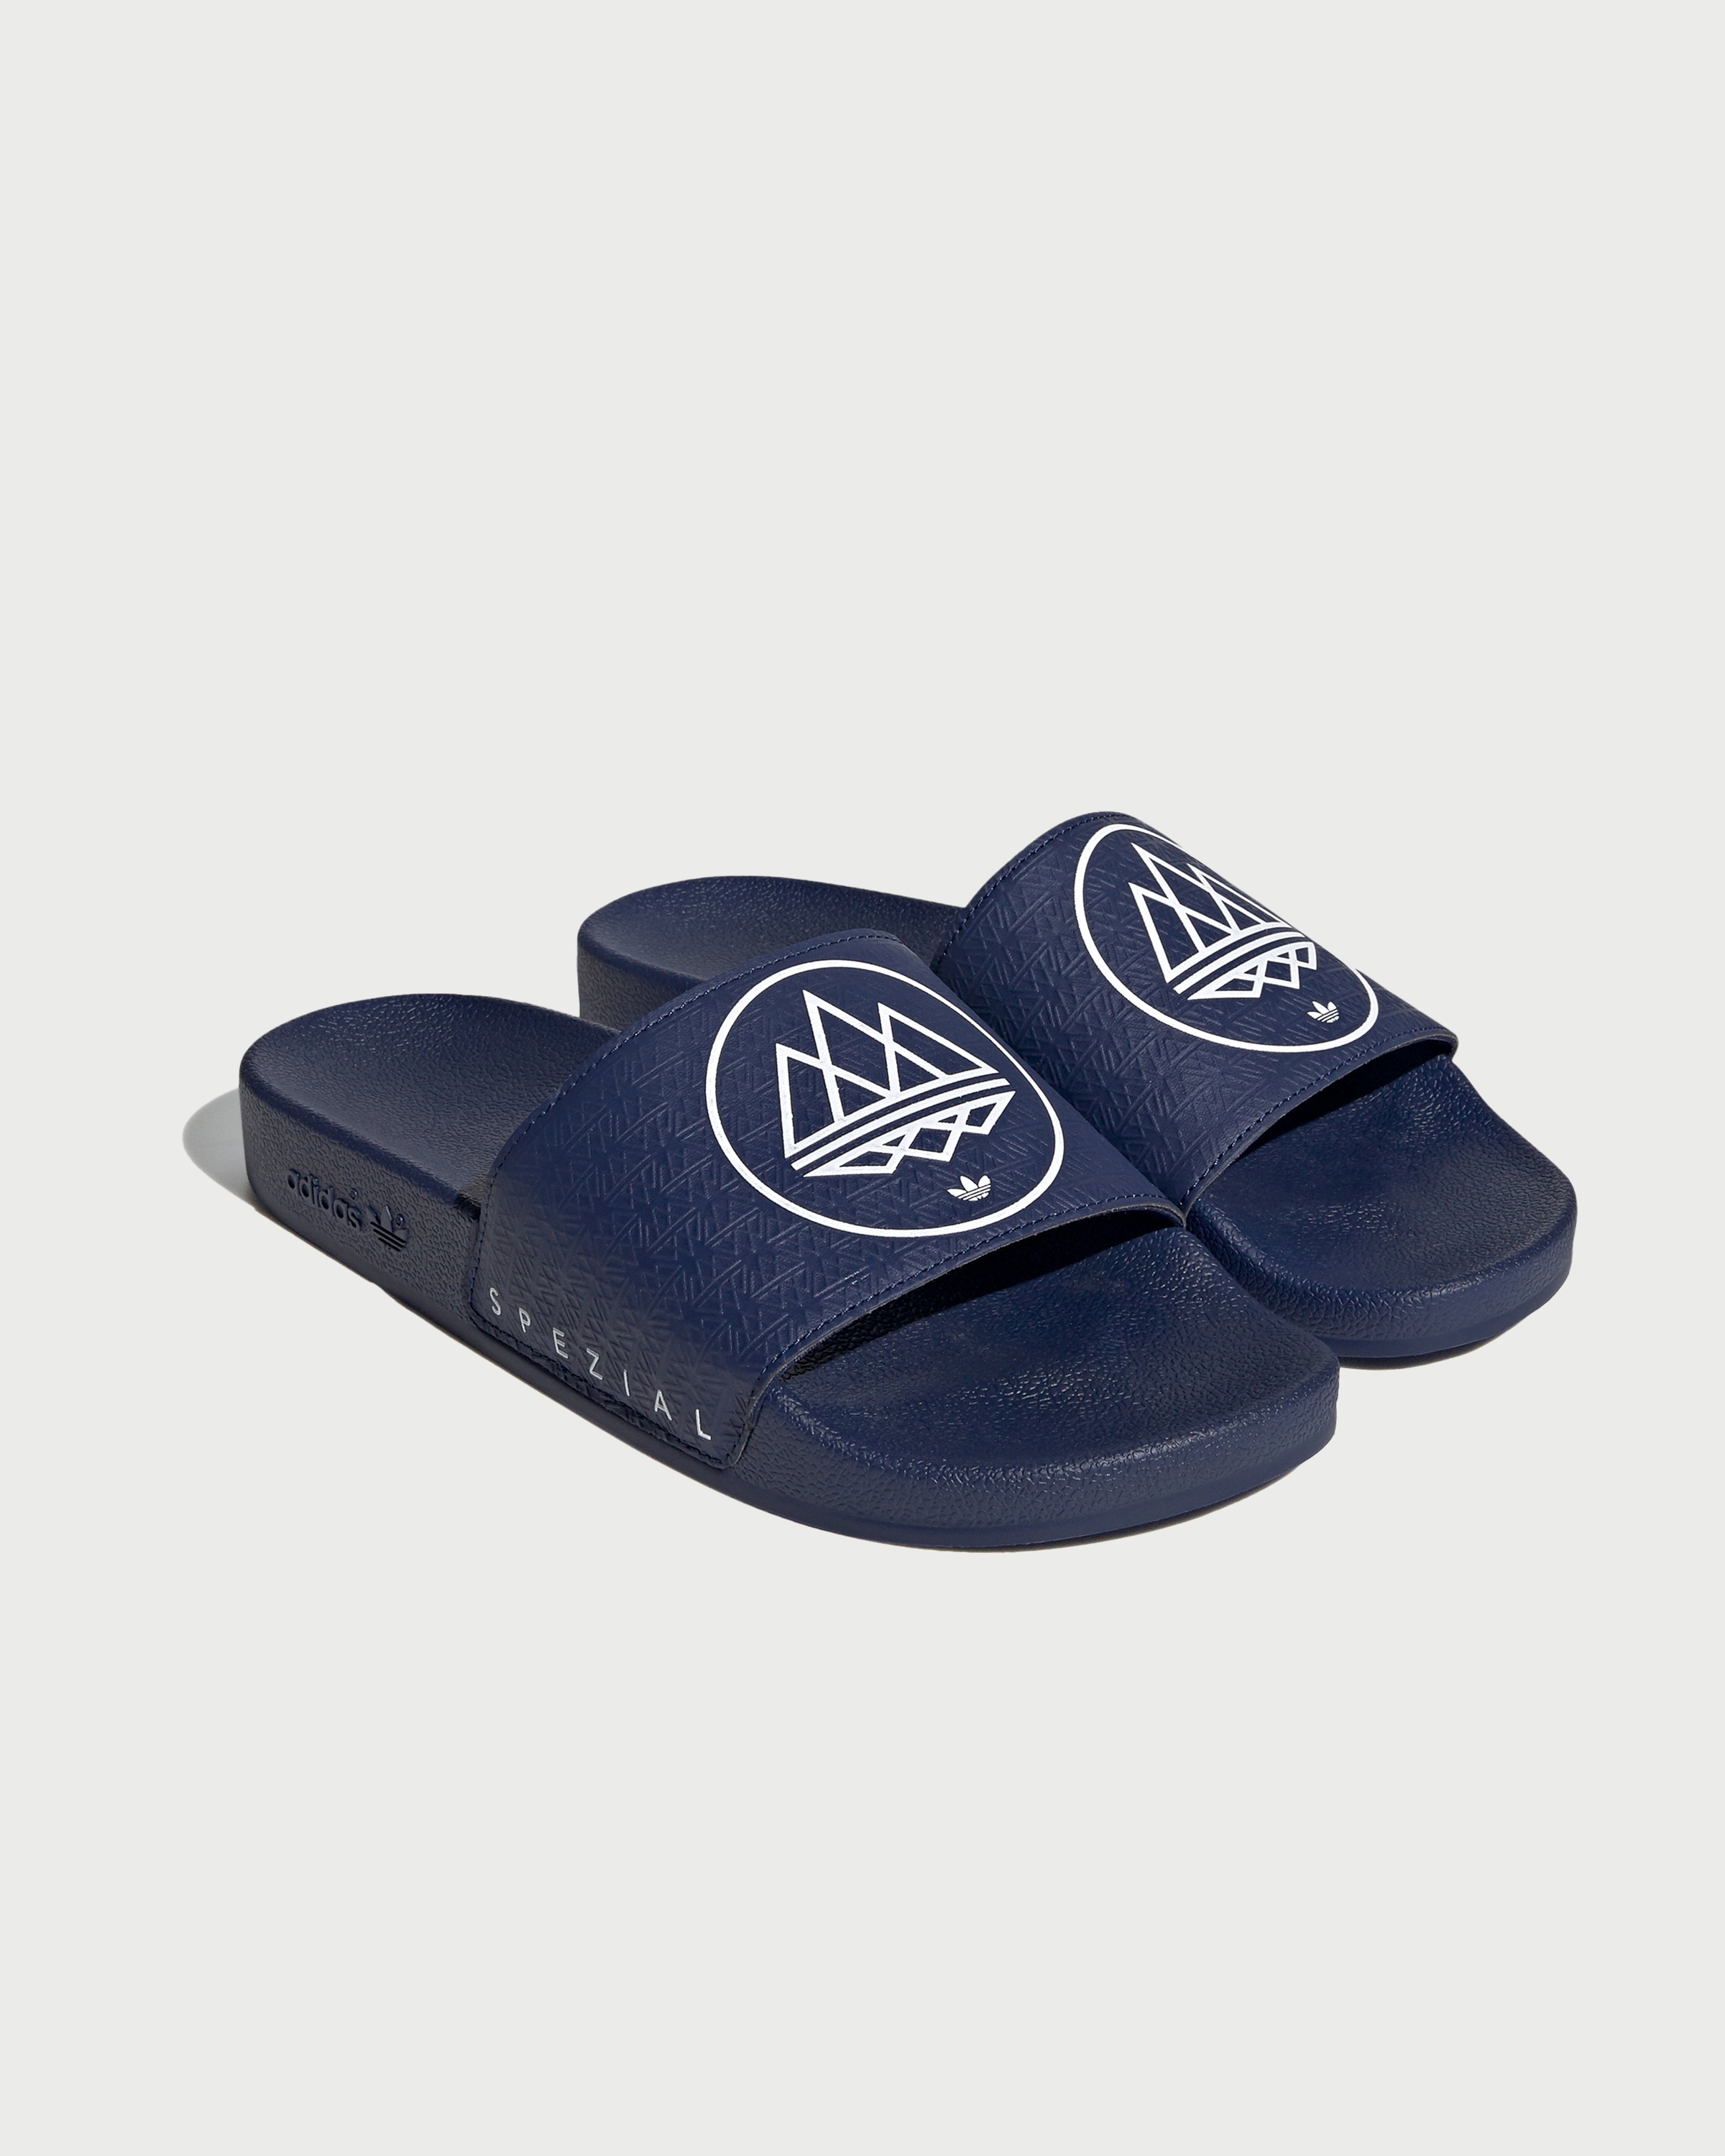 Adidas – Adilette Spezial Navy - Slides - Blue - Image 2